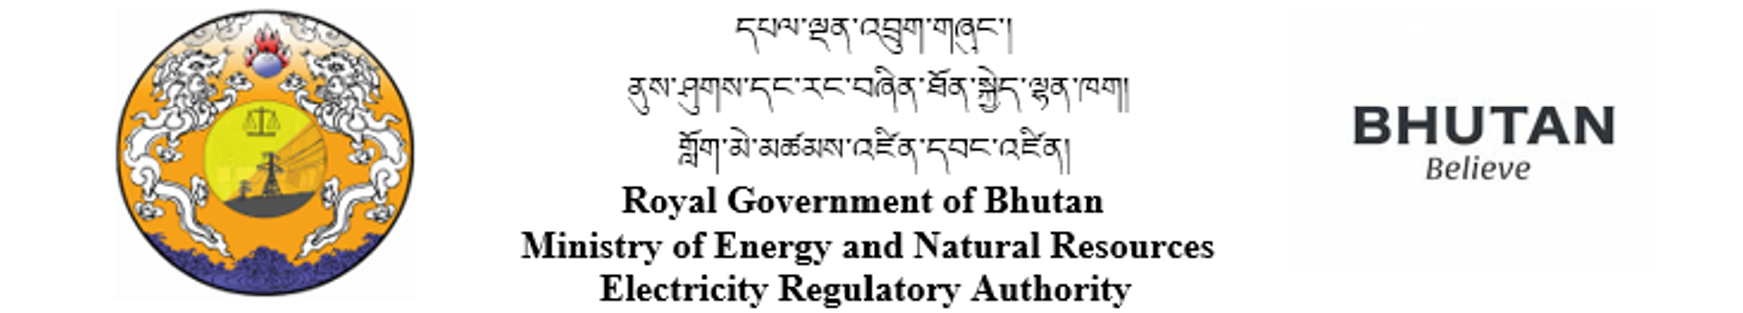 Electricity Regulatory Authority